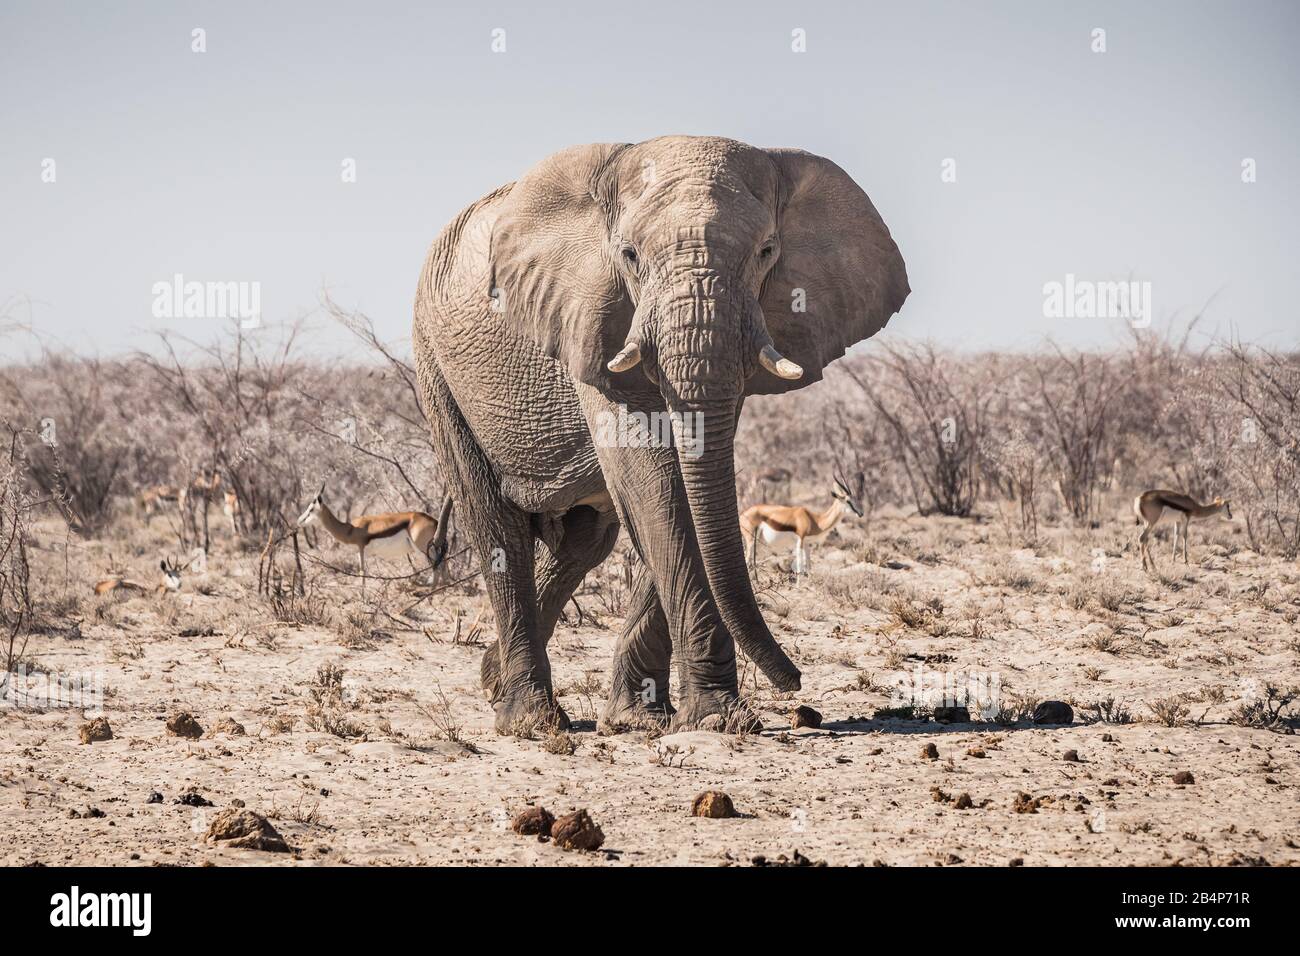 Elephant Bull Standing in Etosha National Park, Namibia, Africa in th Arid, Dry Savannah Stock Photo